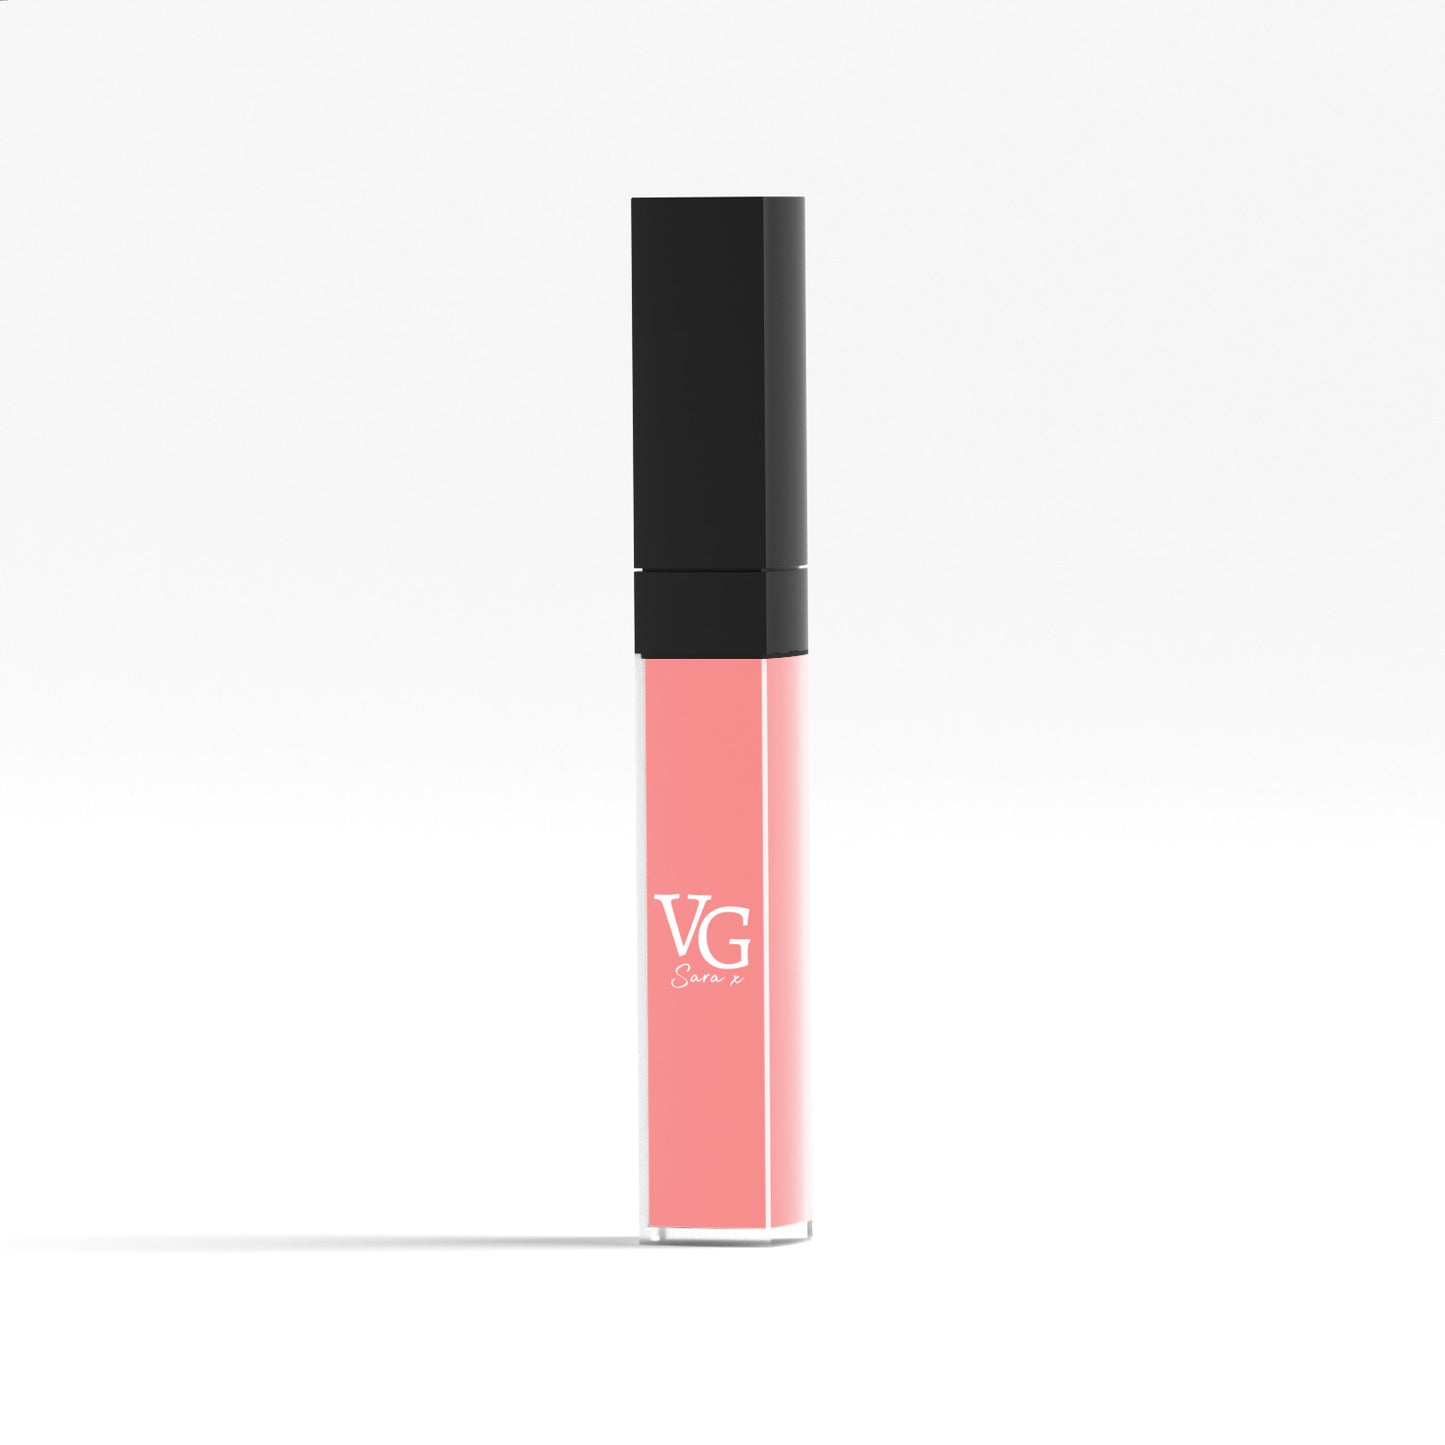 Soft pink vegan liquid lipstick featuring the VG trademark